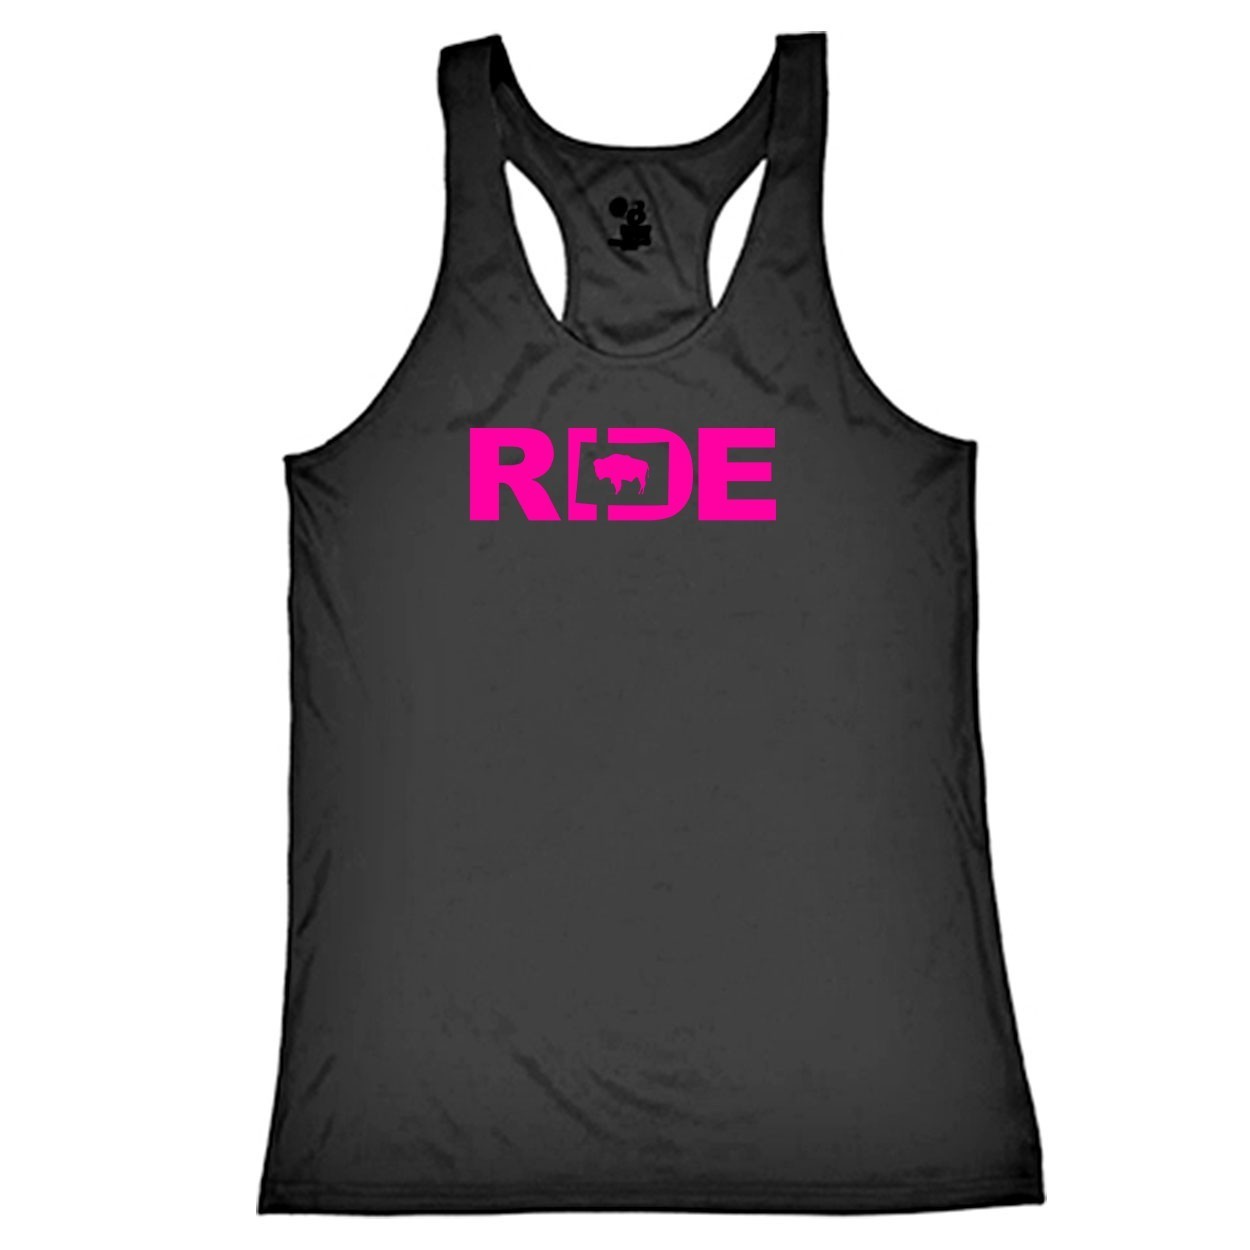 Ride Wyoming Classic Youth Girls Performance Racerback Tank Top Black (Pink Logo)